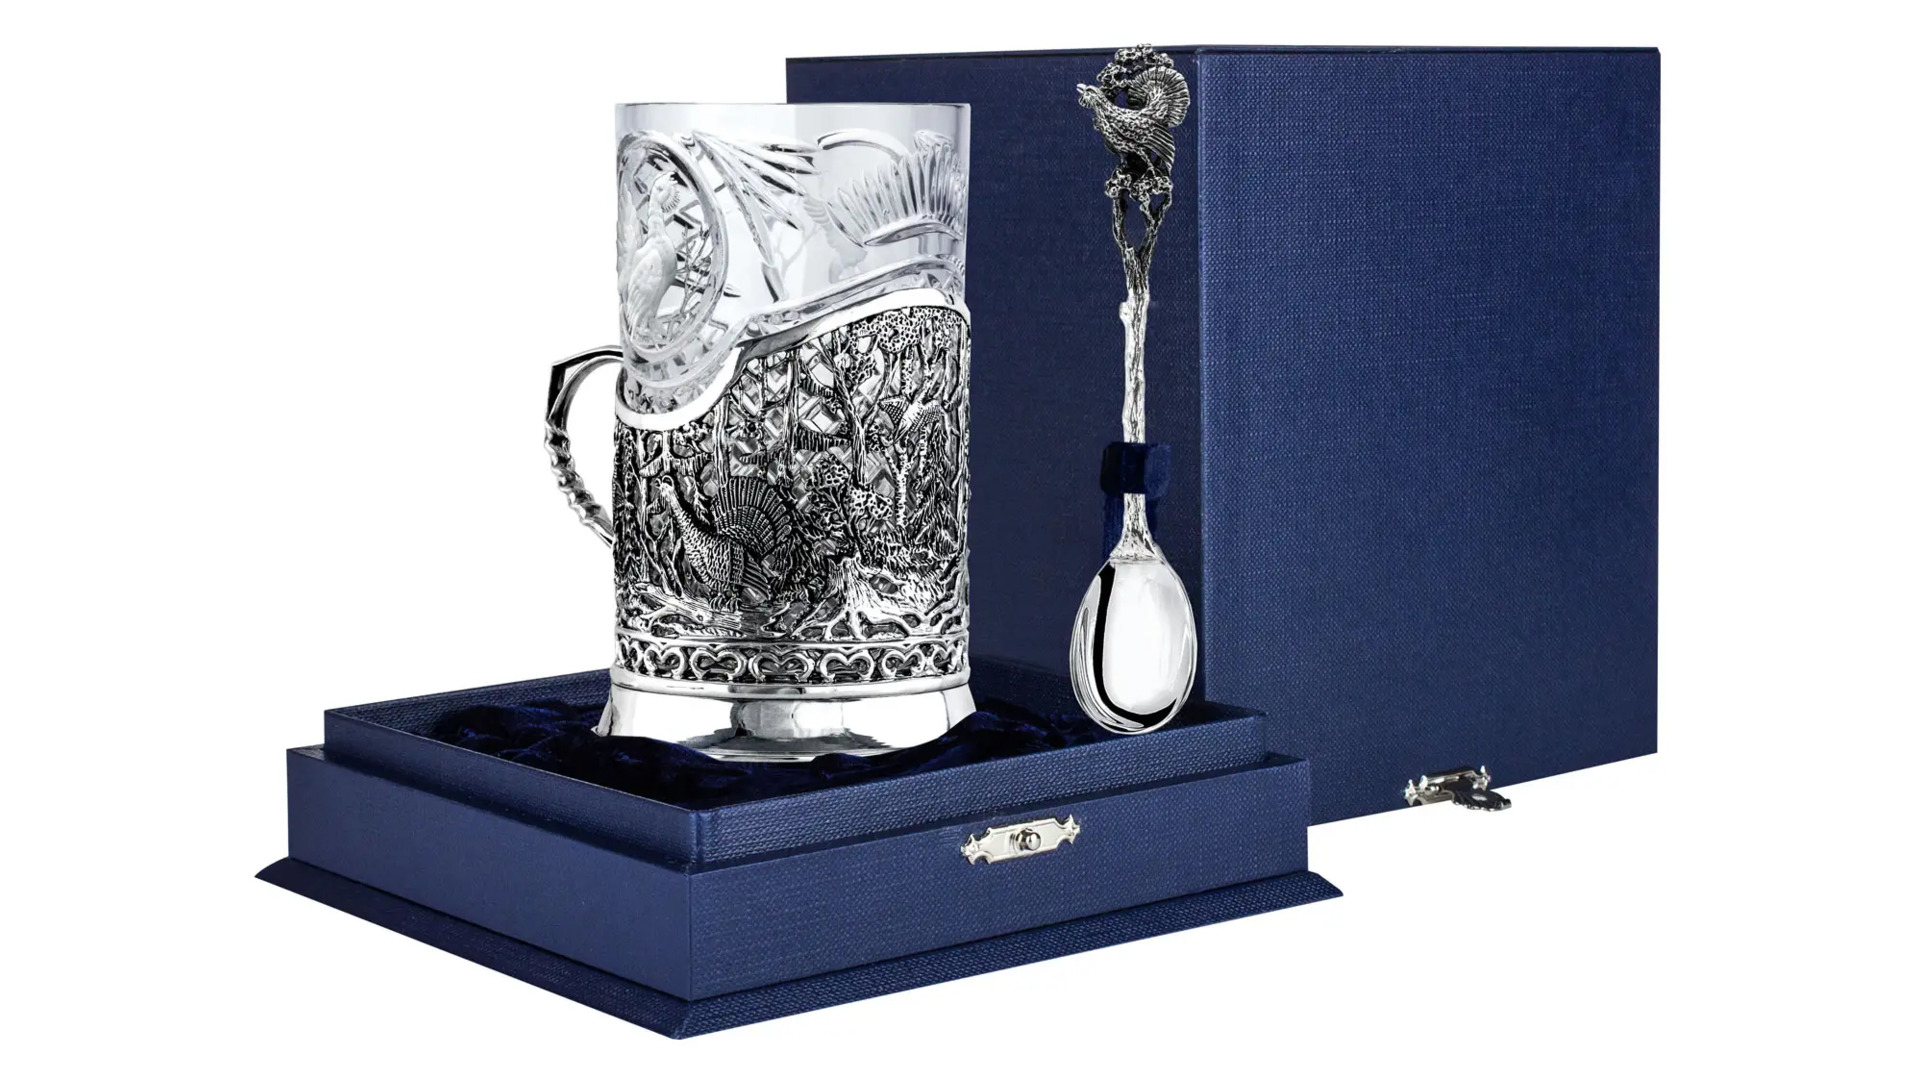 Набор чайный в футляре АргентА Classic Глухариная охота 236,62 г, 3 предмета, серебро 925